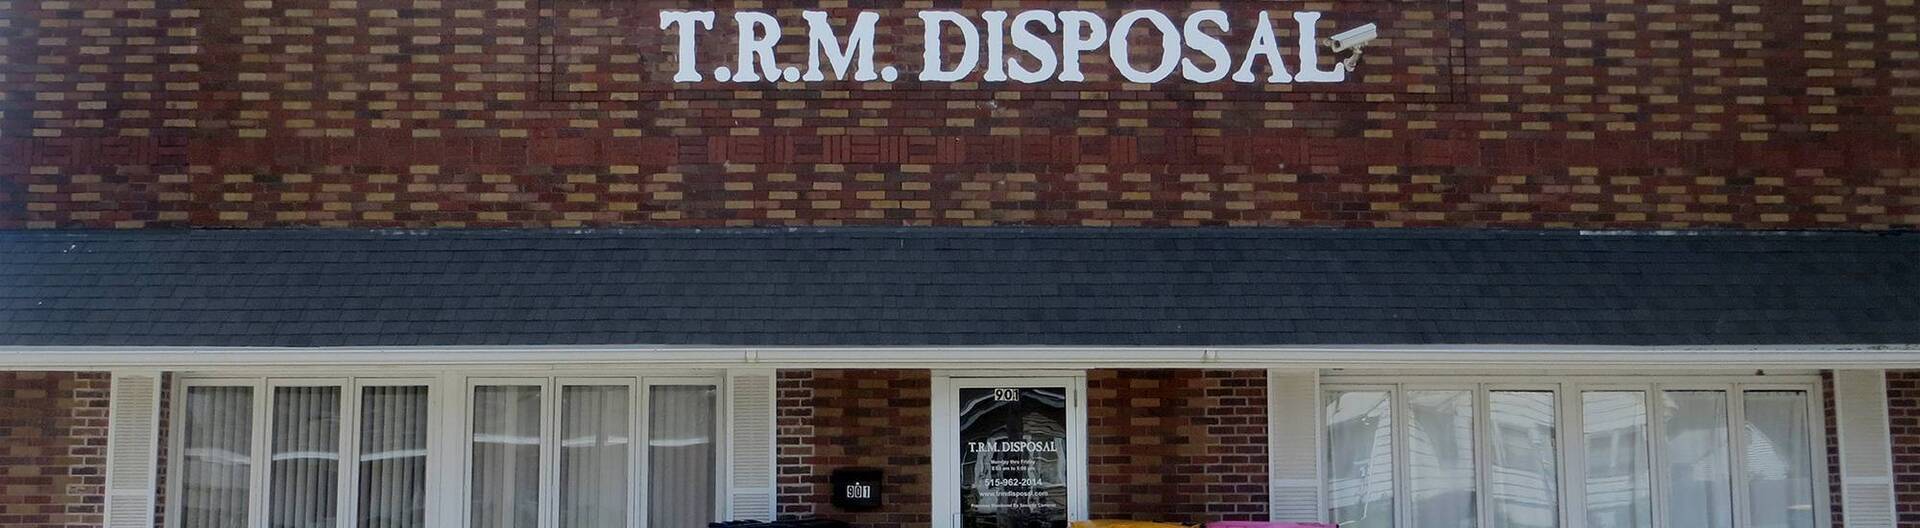 TRM Disposal